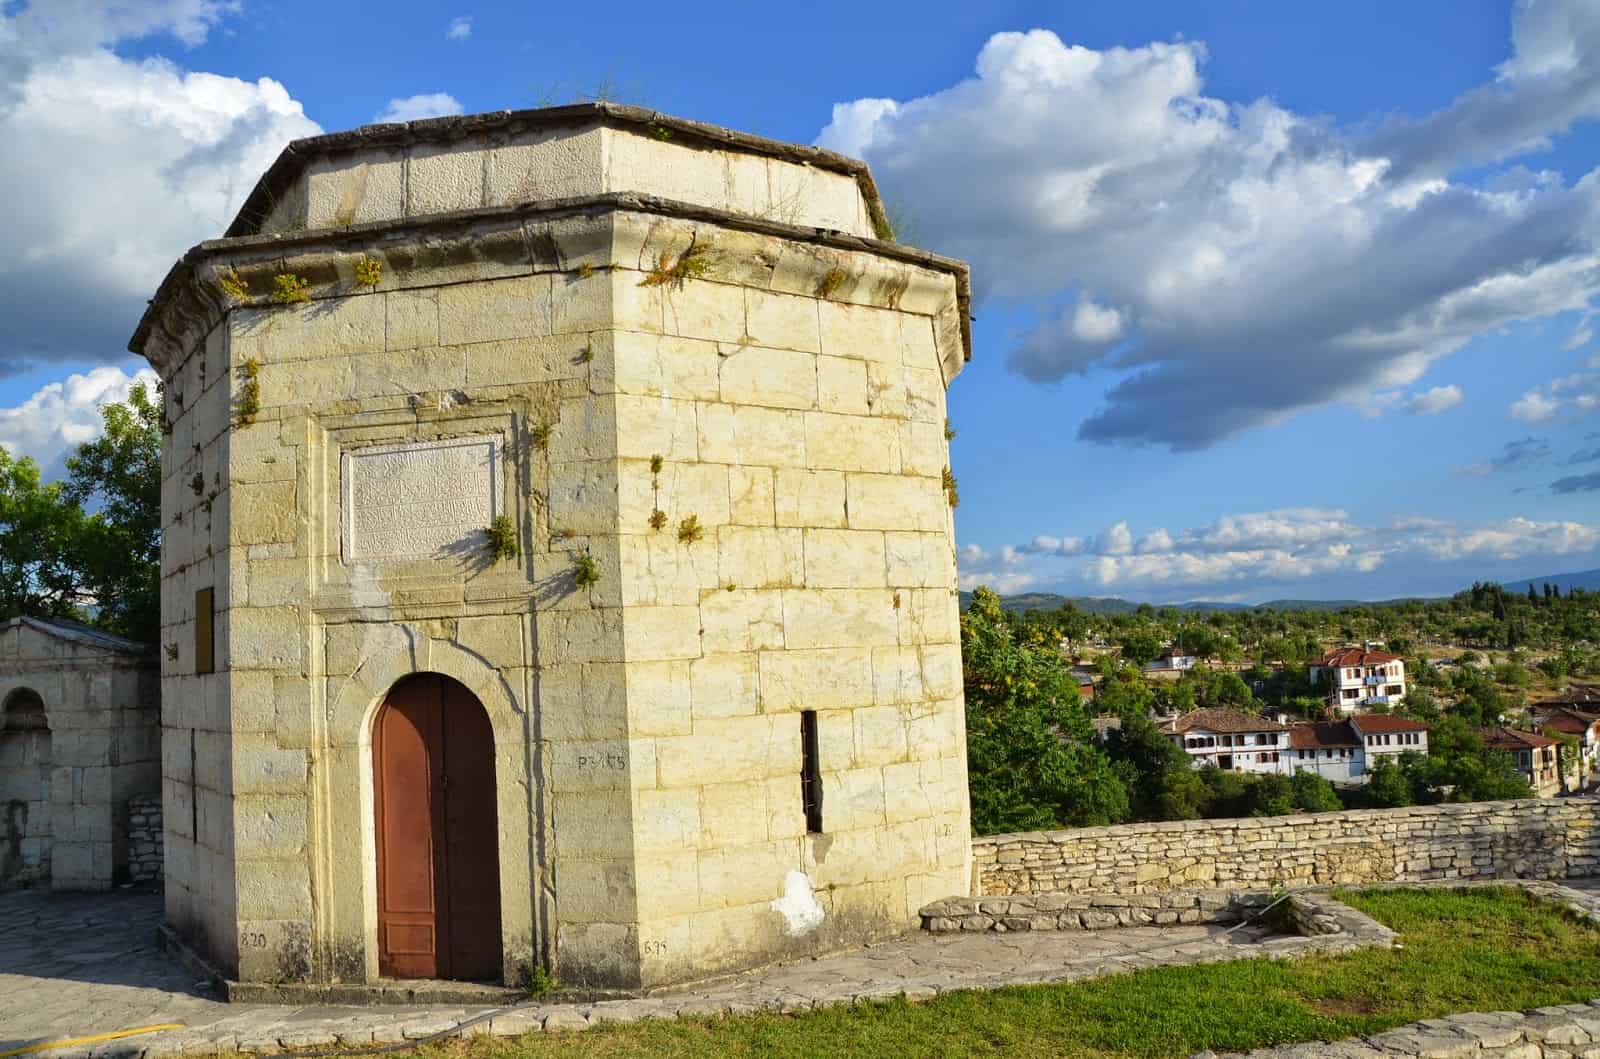 Tomb of Hasan Pasha in Safranbolu, Turkey